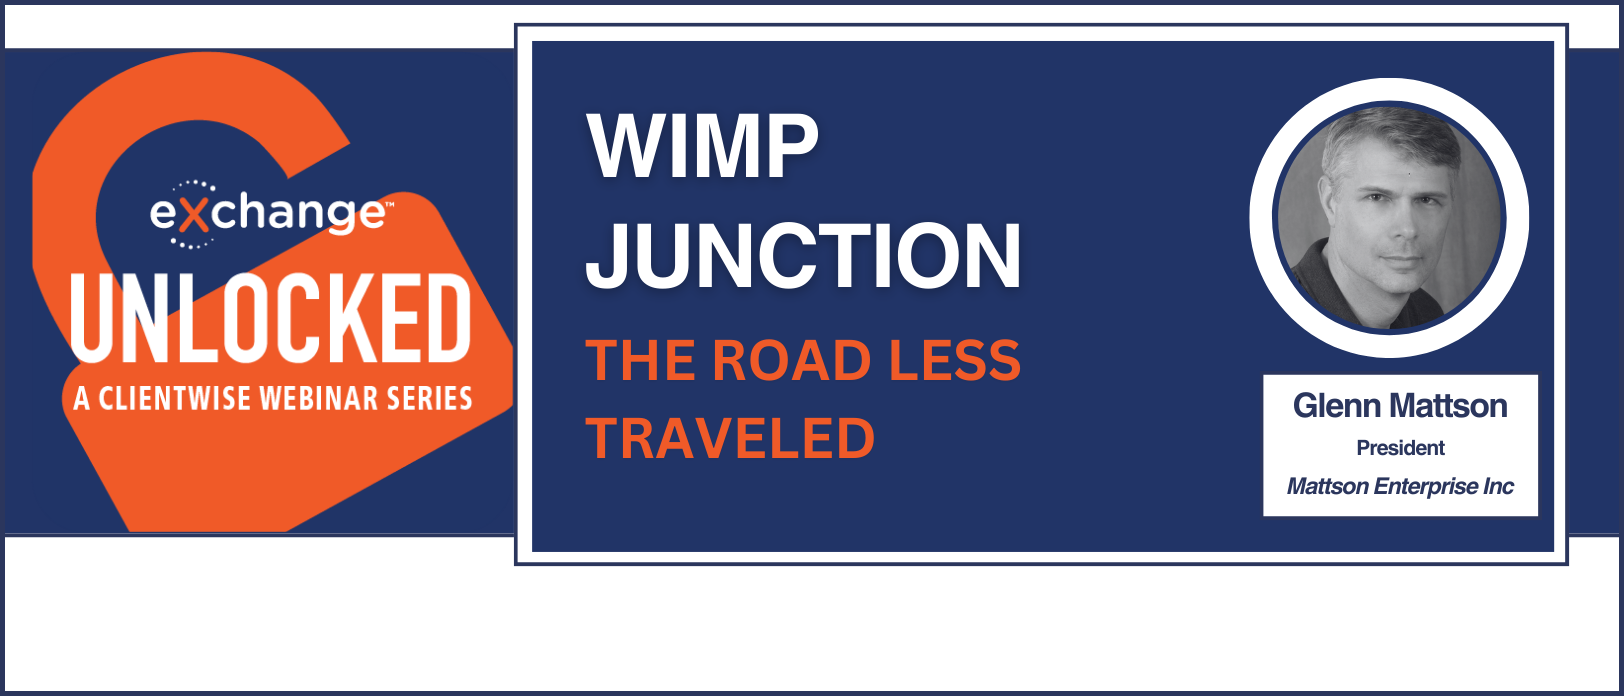 Wimp Junction the road less traveled v2 (1)